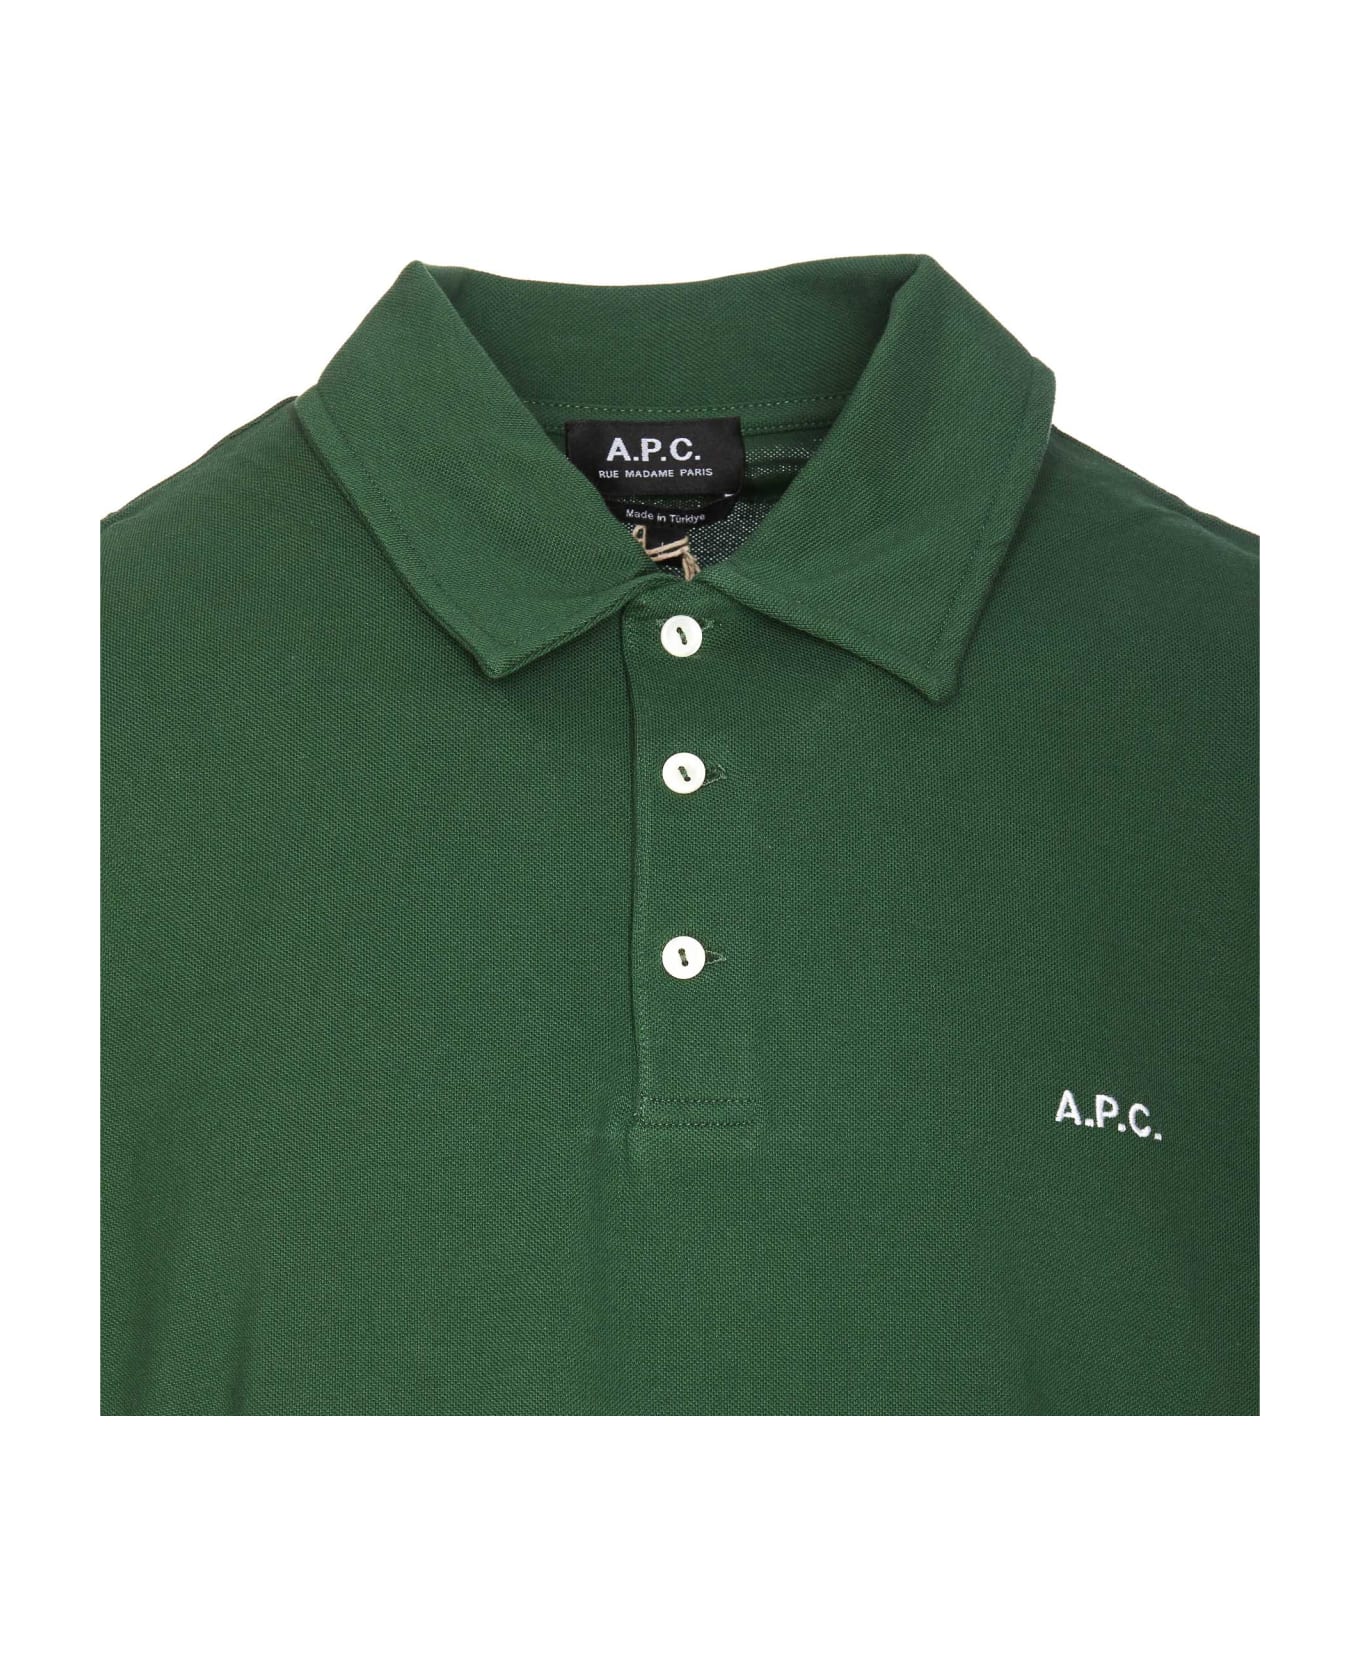 A.P.C. Austin Polo - Green